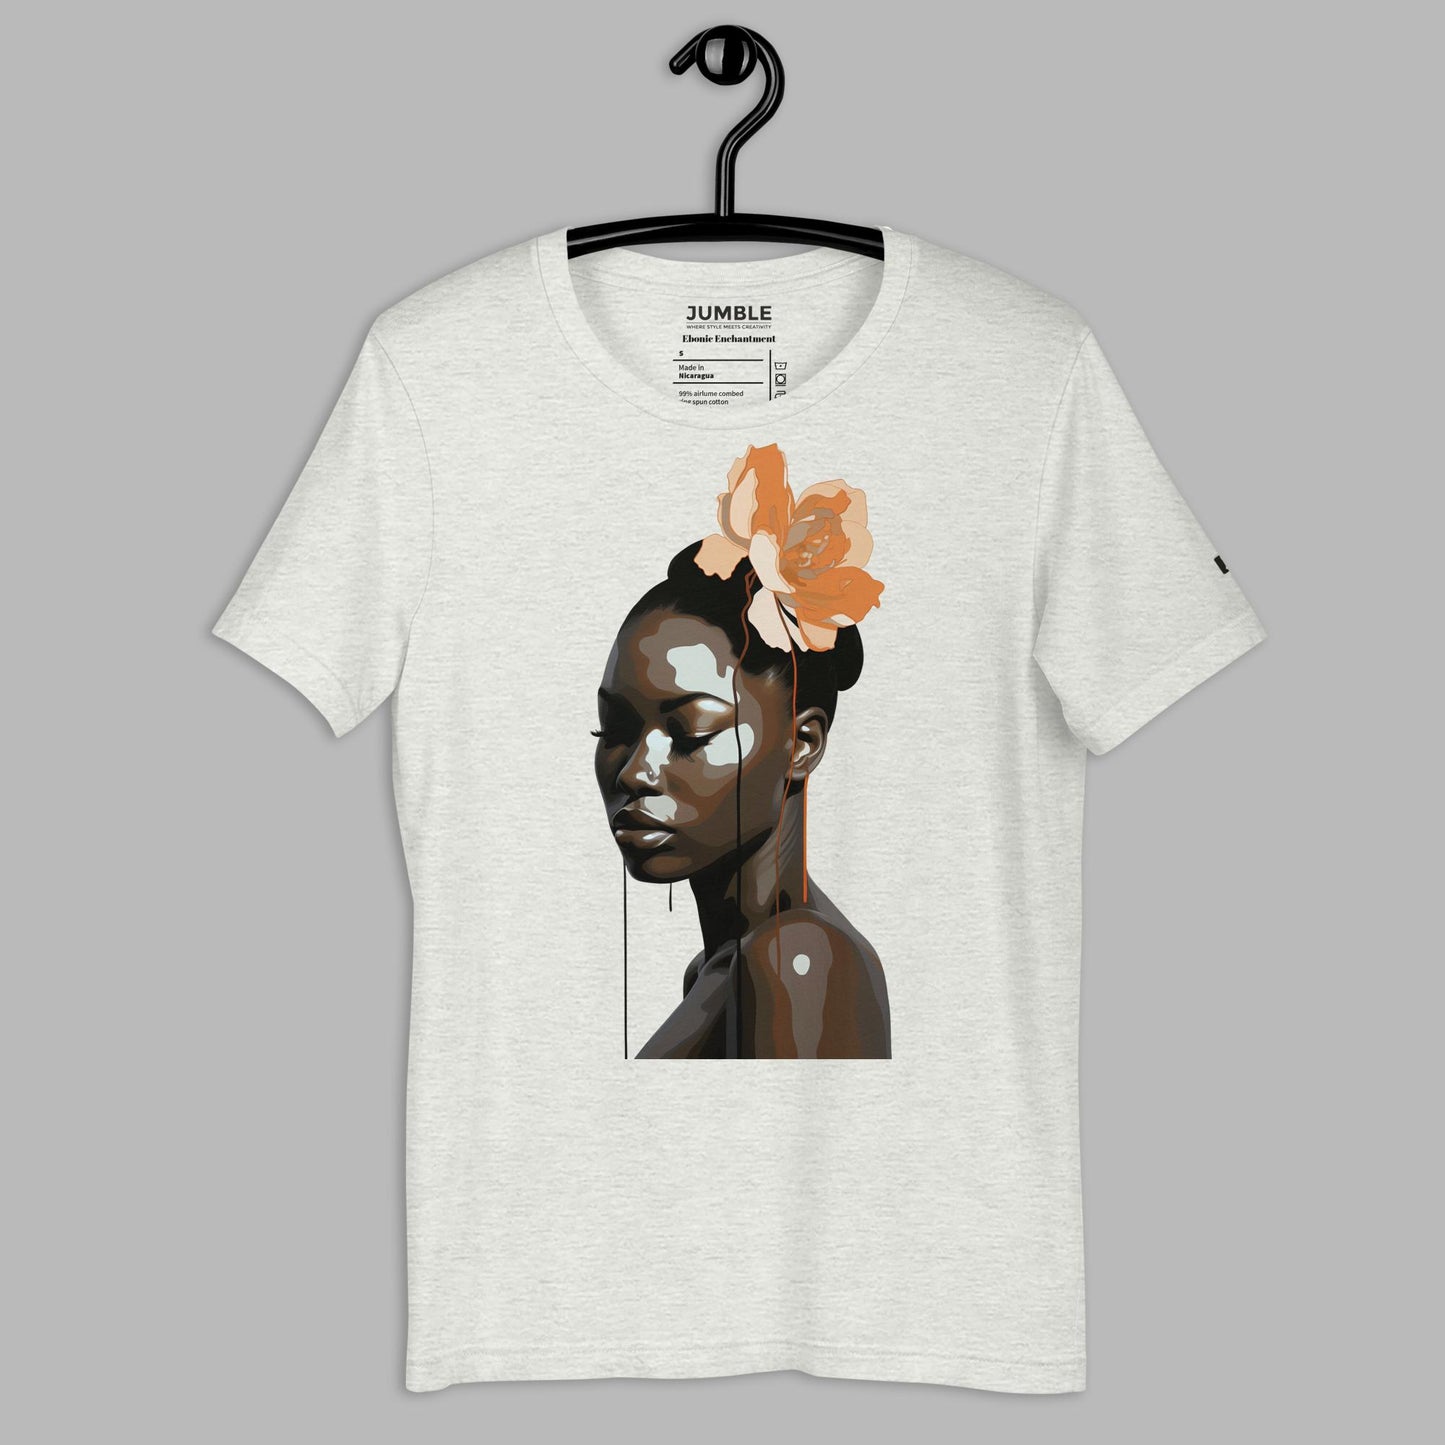 Ebonic Enchantment Unisex t-shirt, in ash. Displayed on hanger